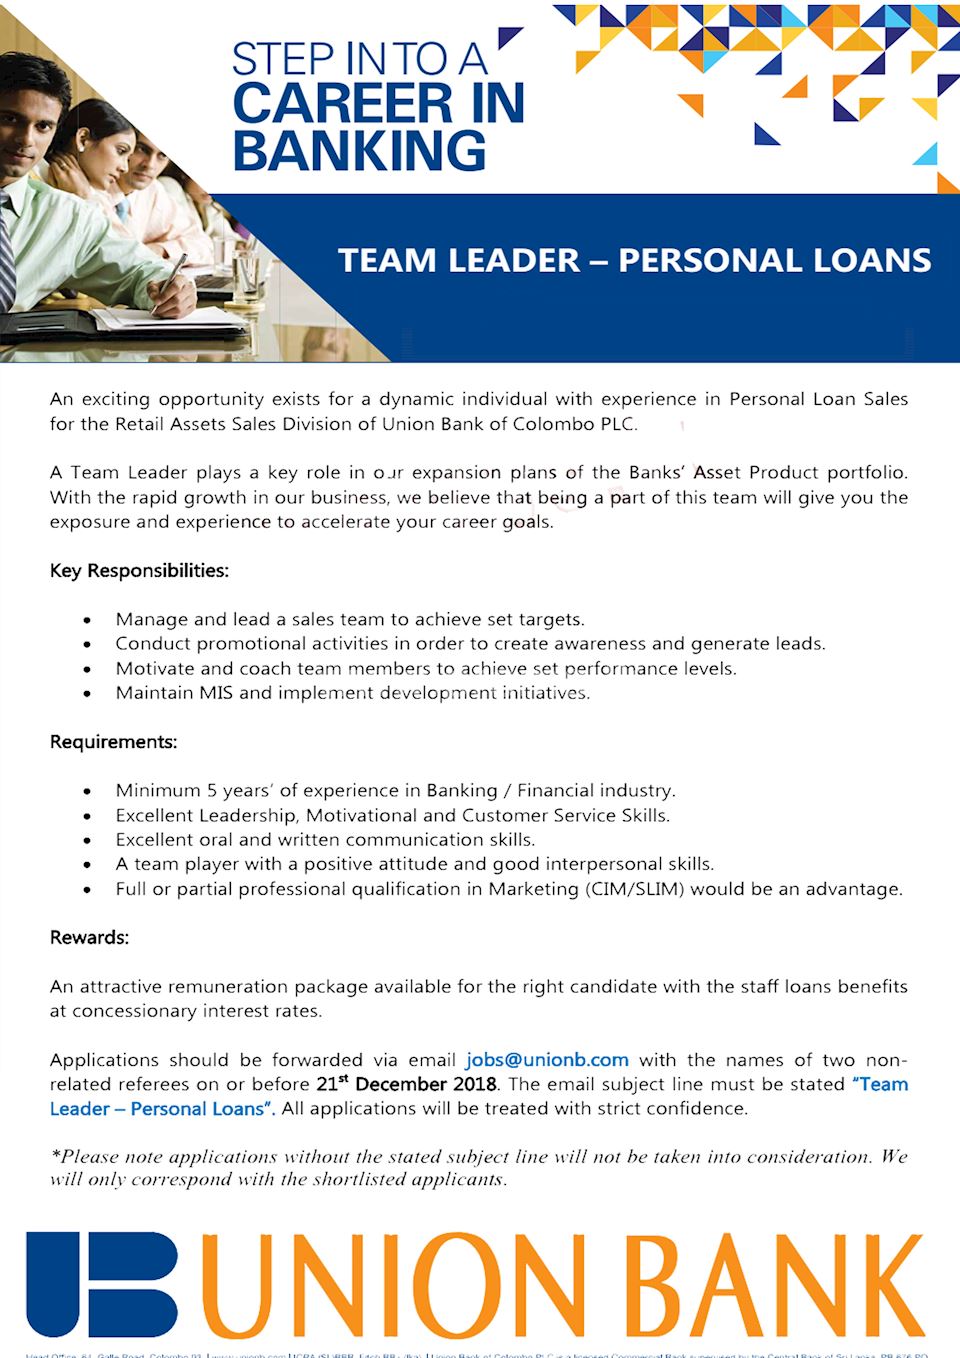 Team Leader - Personal Loans